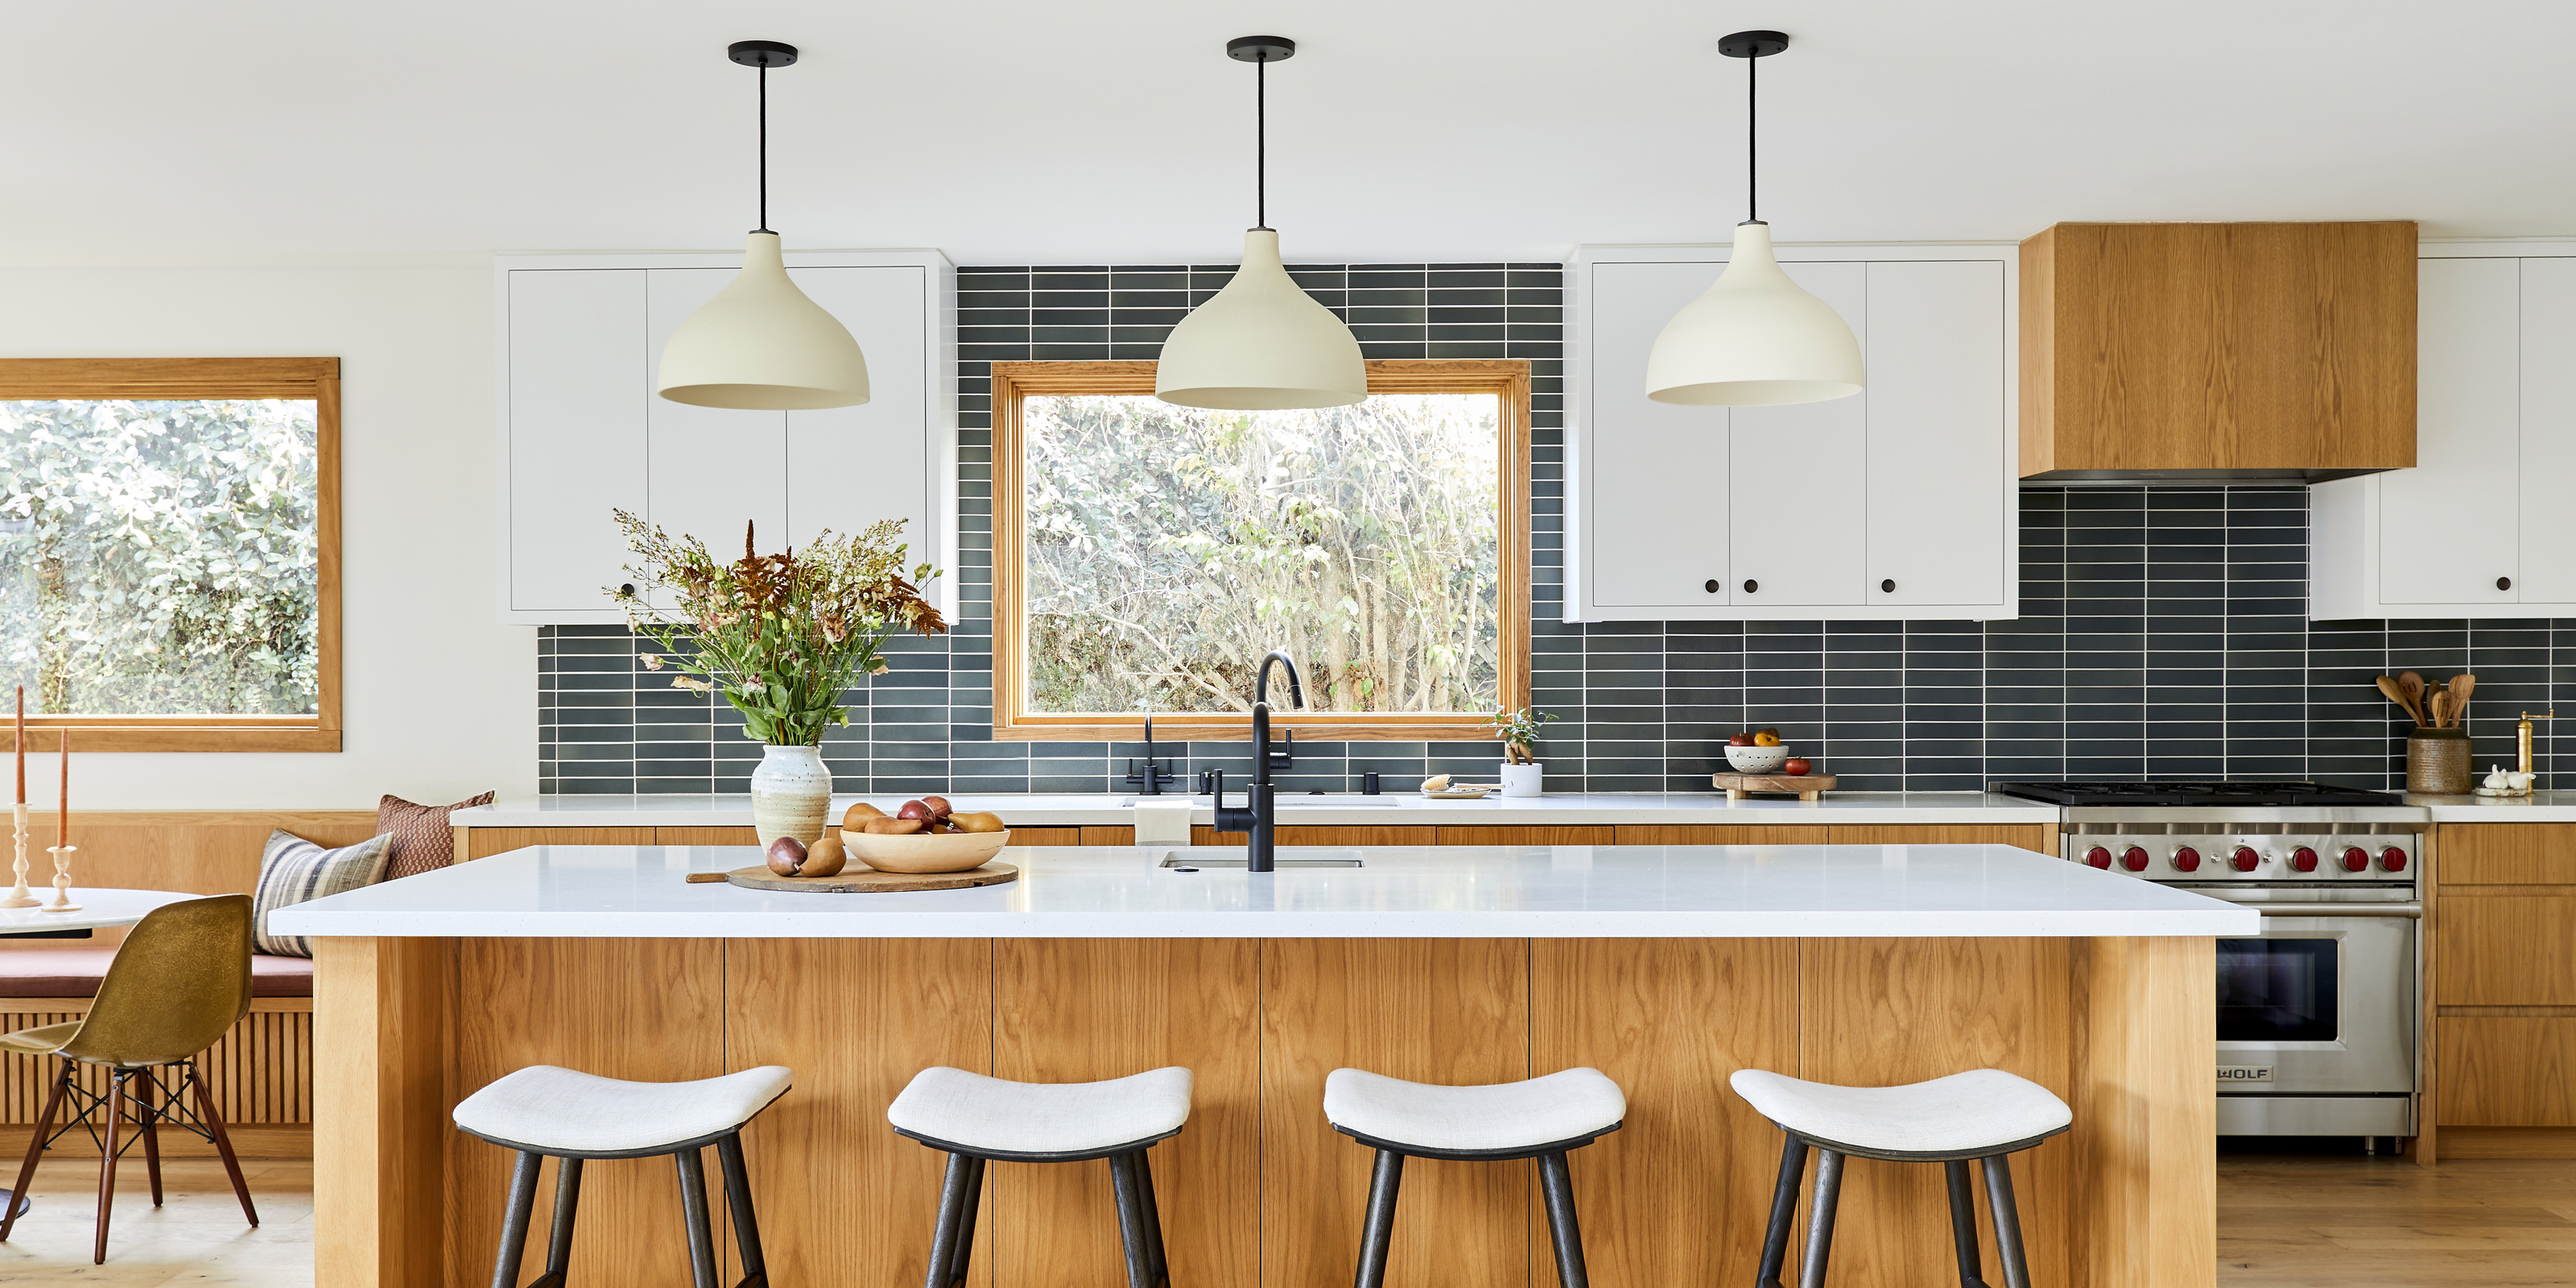 Kitchen lighting ideas 18 lights designs to set the scene   Homes ...